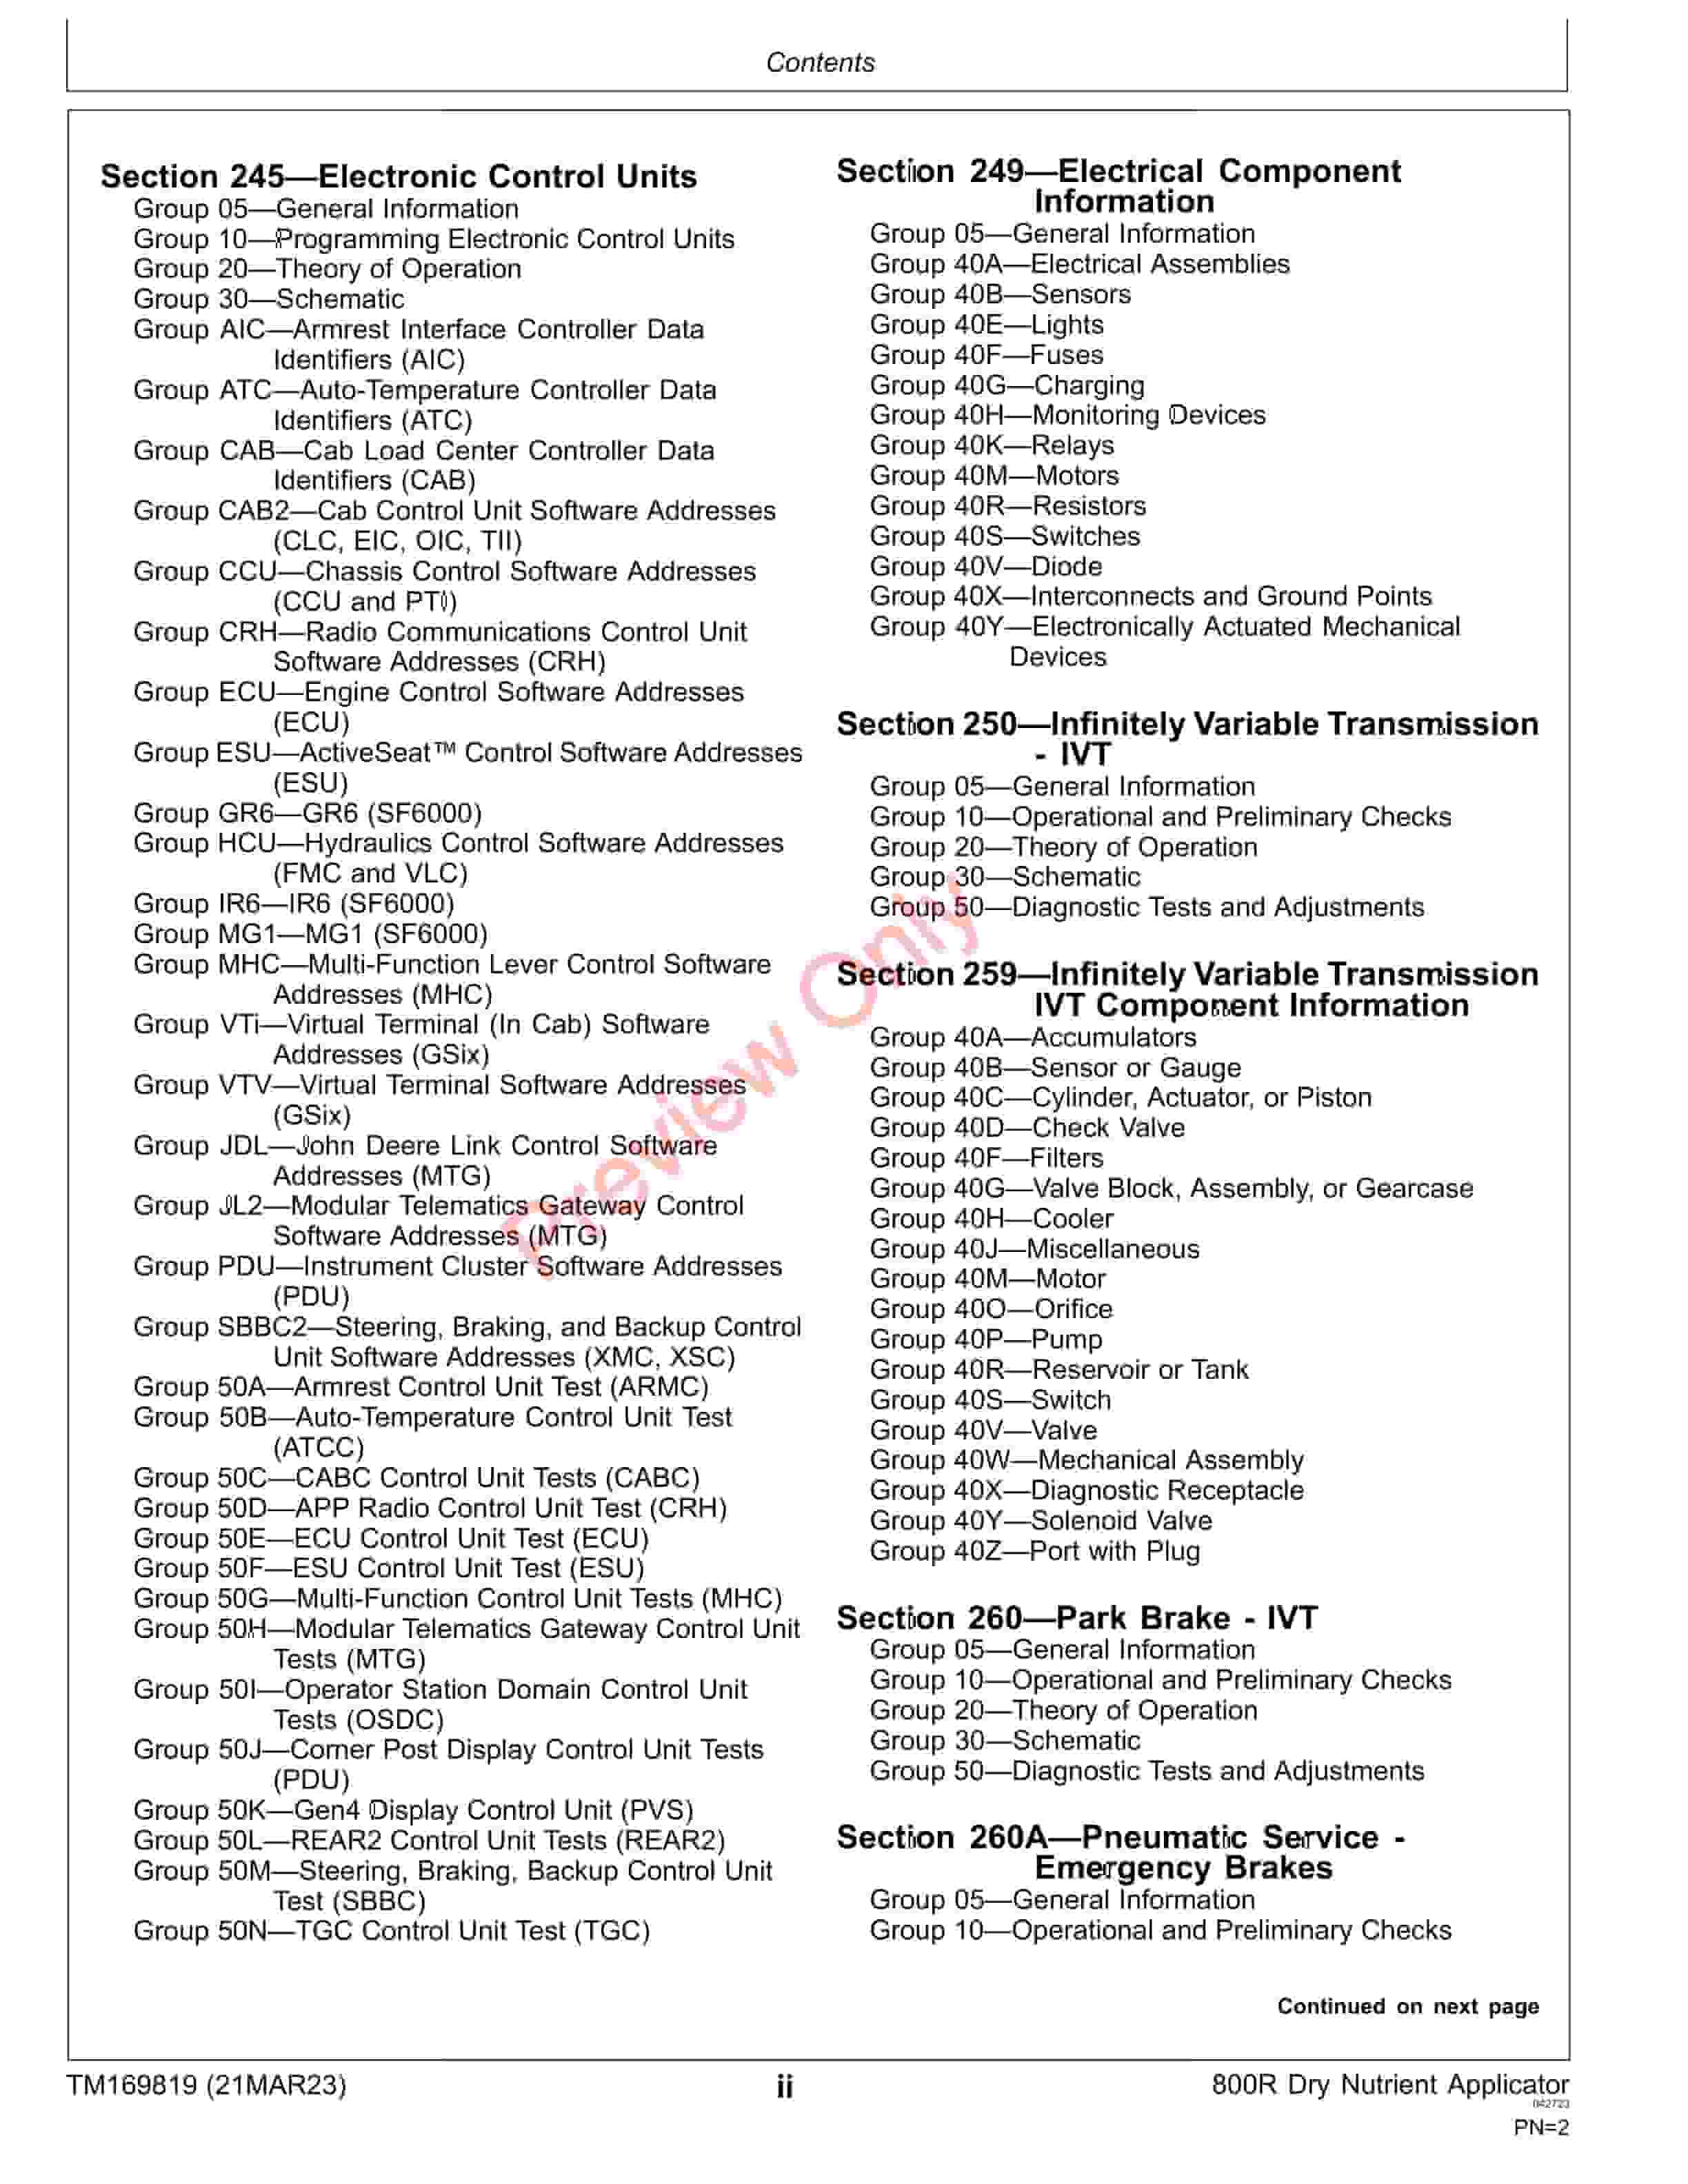 John Deere 800R Dry Nutrient Applicator Diagnostic Technical Manual TM169819 21MAR23 4